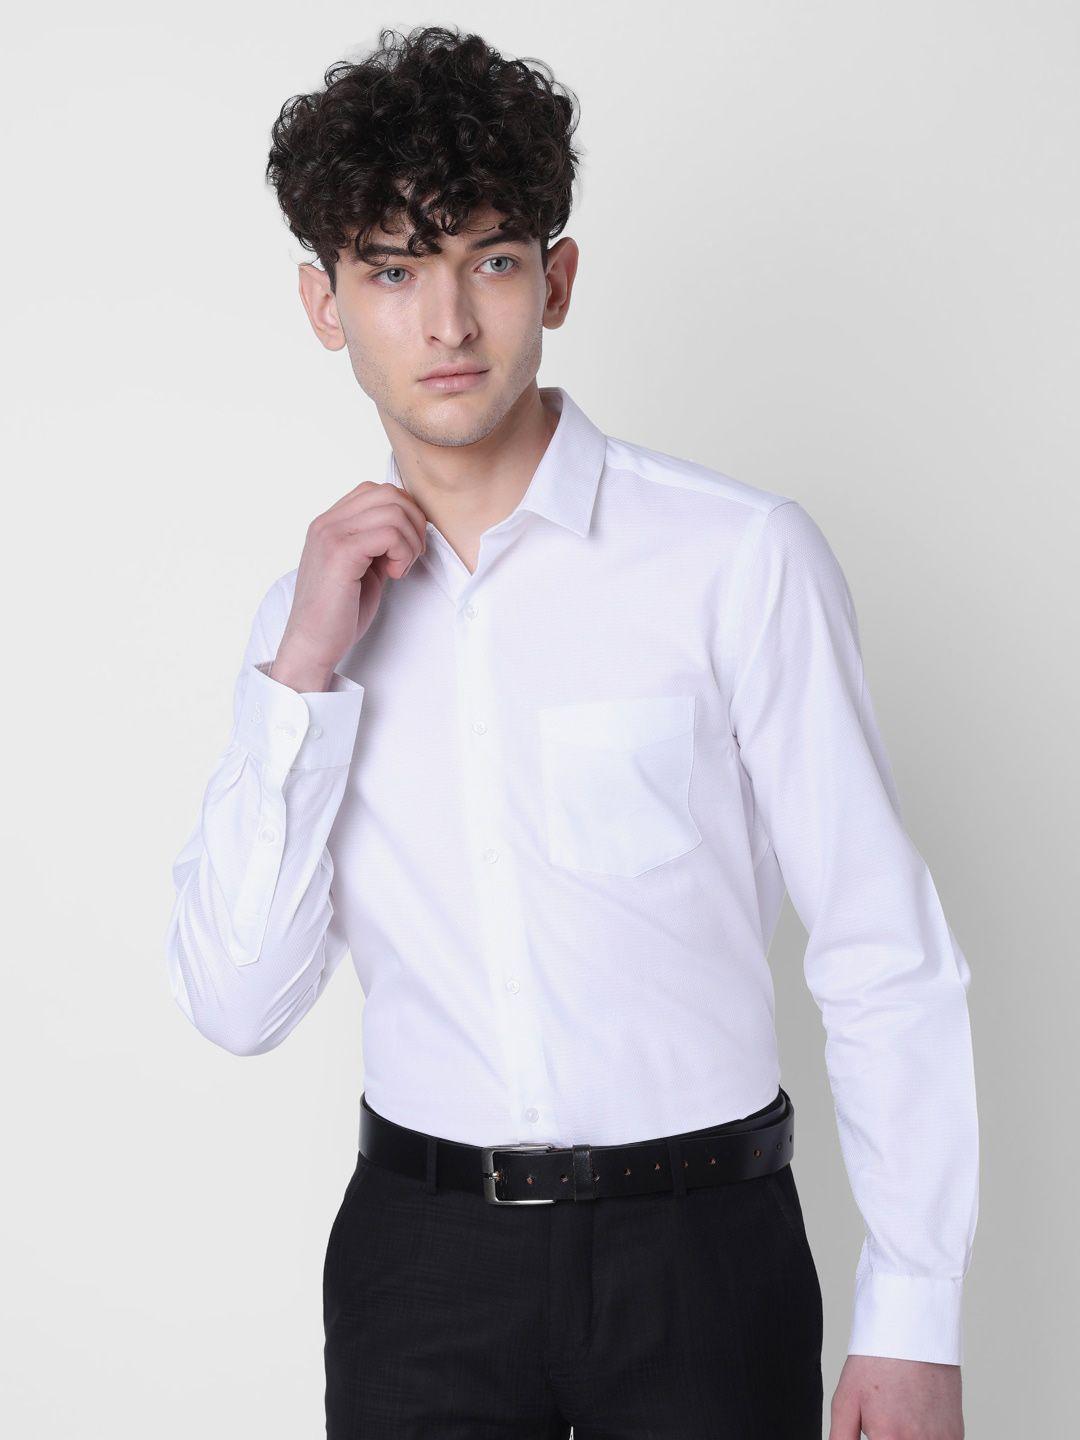 j hampstead classic slim fit opaque cotton formal shirt